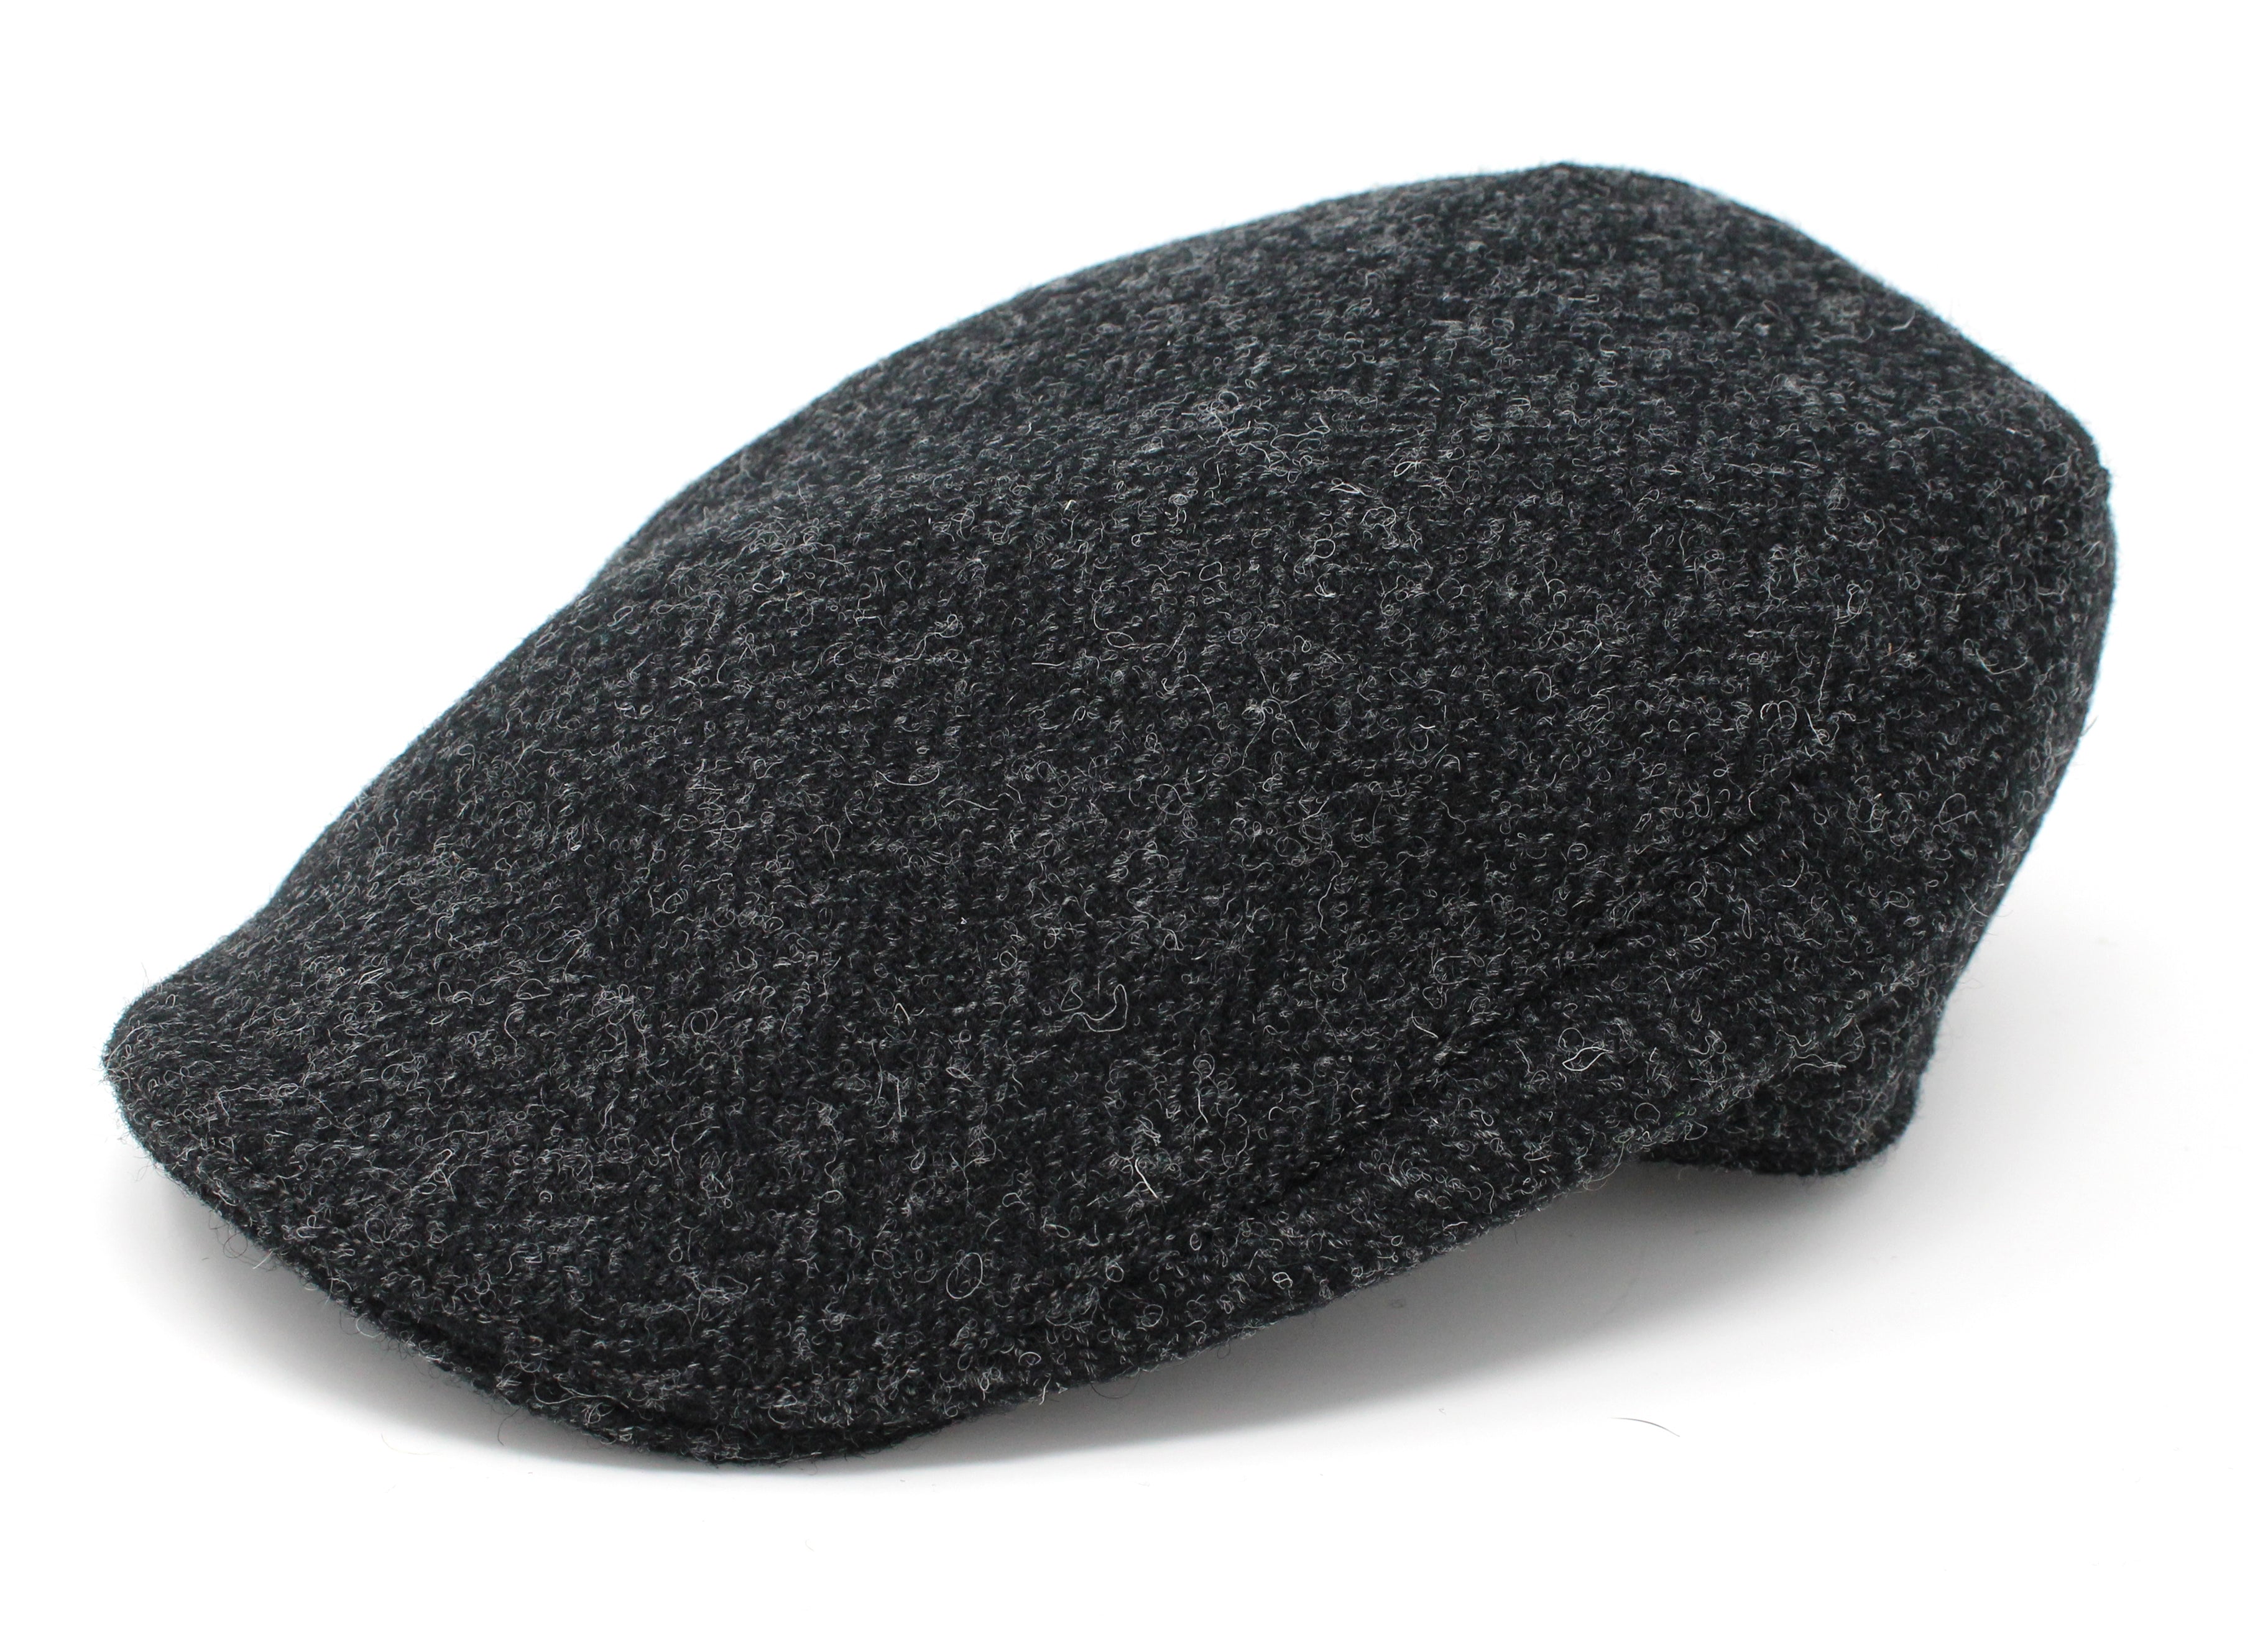 Hanna Hats Donegal Touring Cap Tweed Black & Charcoal Herringbone Harris Scottish Tweed